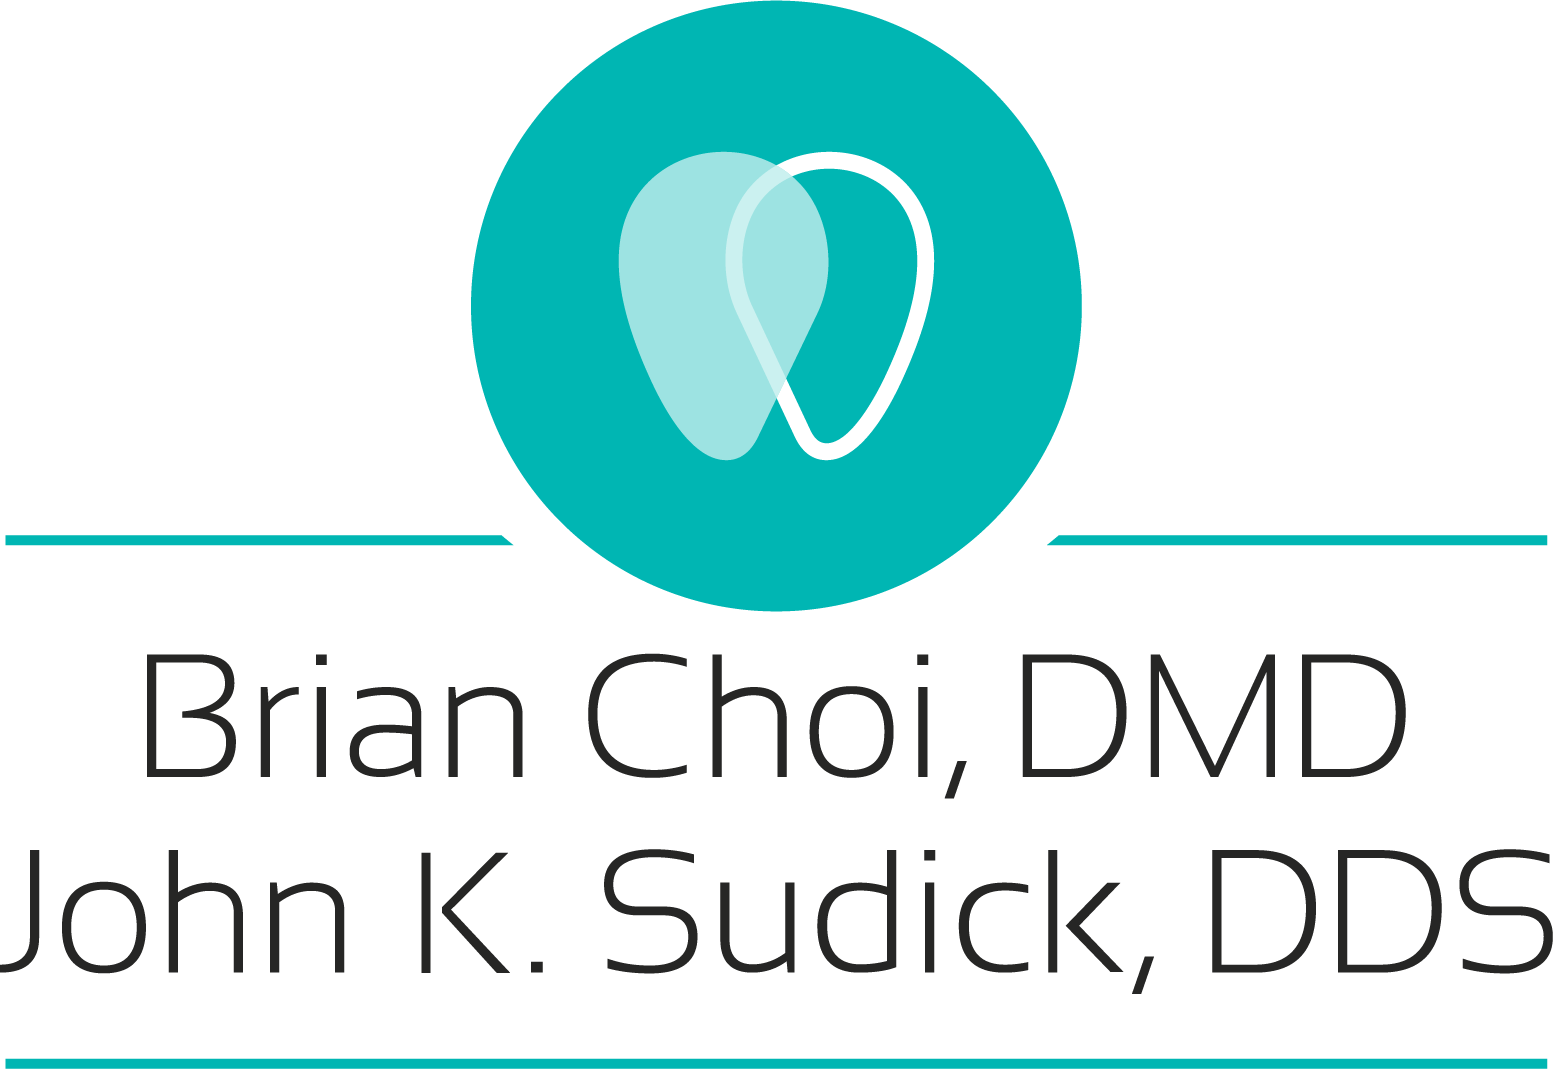 John K. Sudick, DDS & Brian Choi. DMD